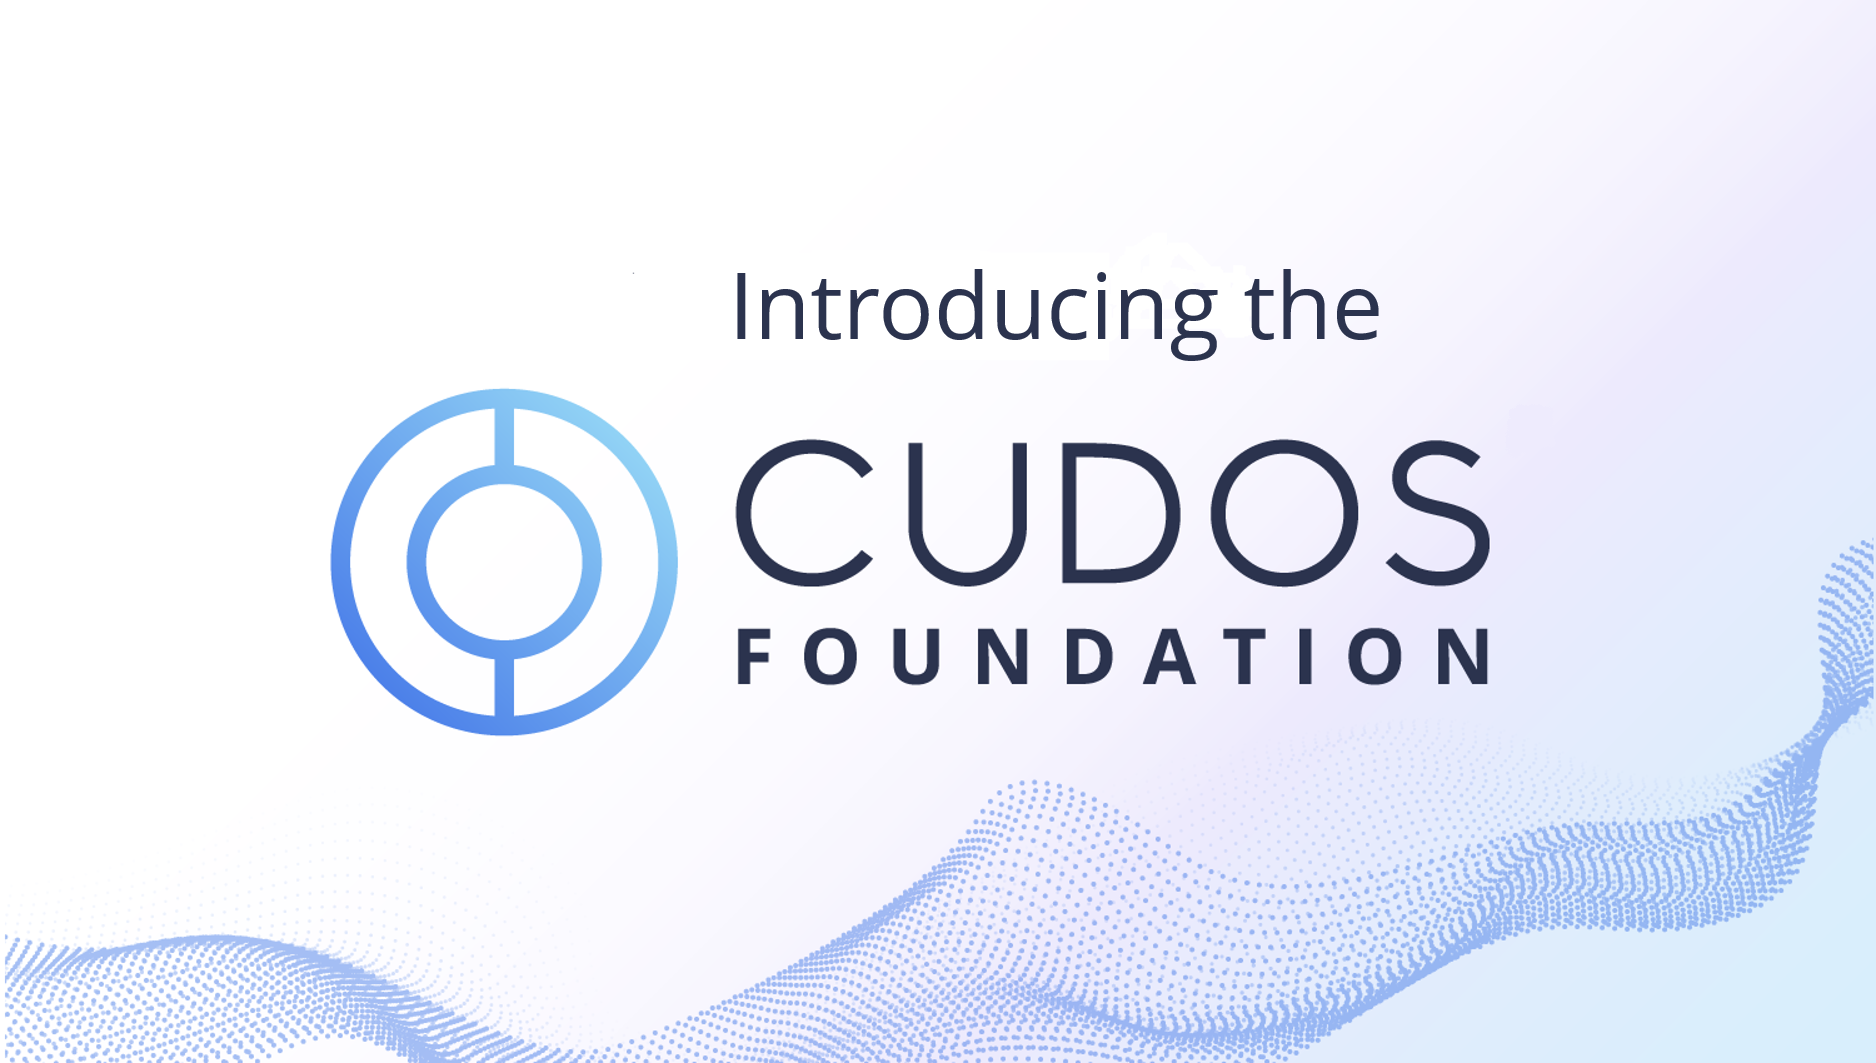 Cudos Launches a Foundation to Champion Blockchain Adoption